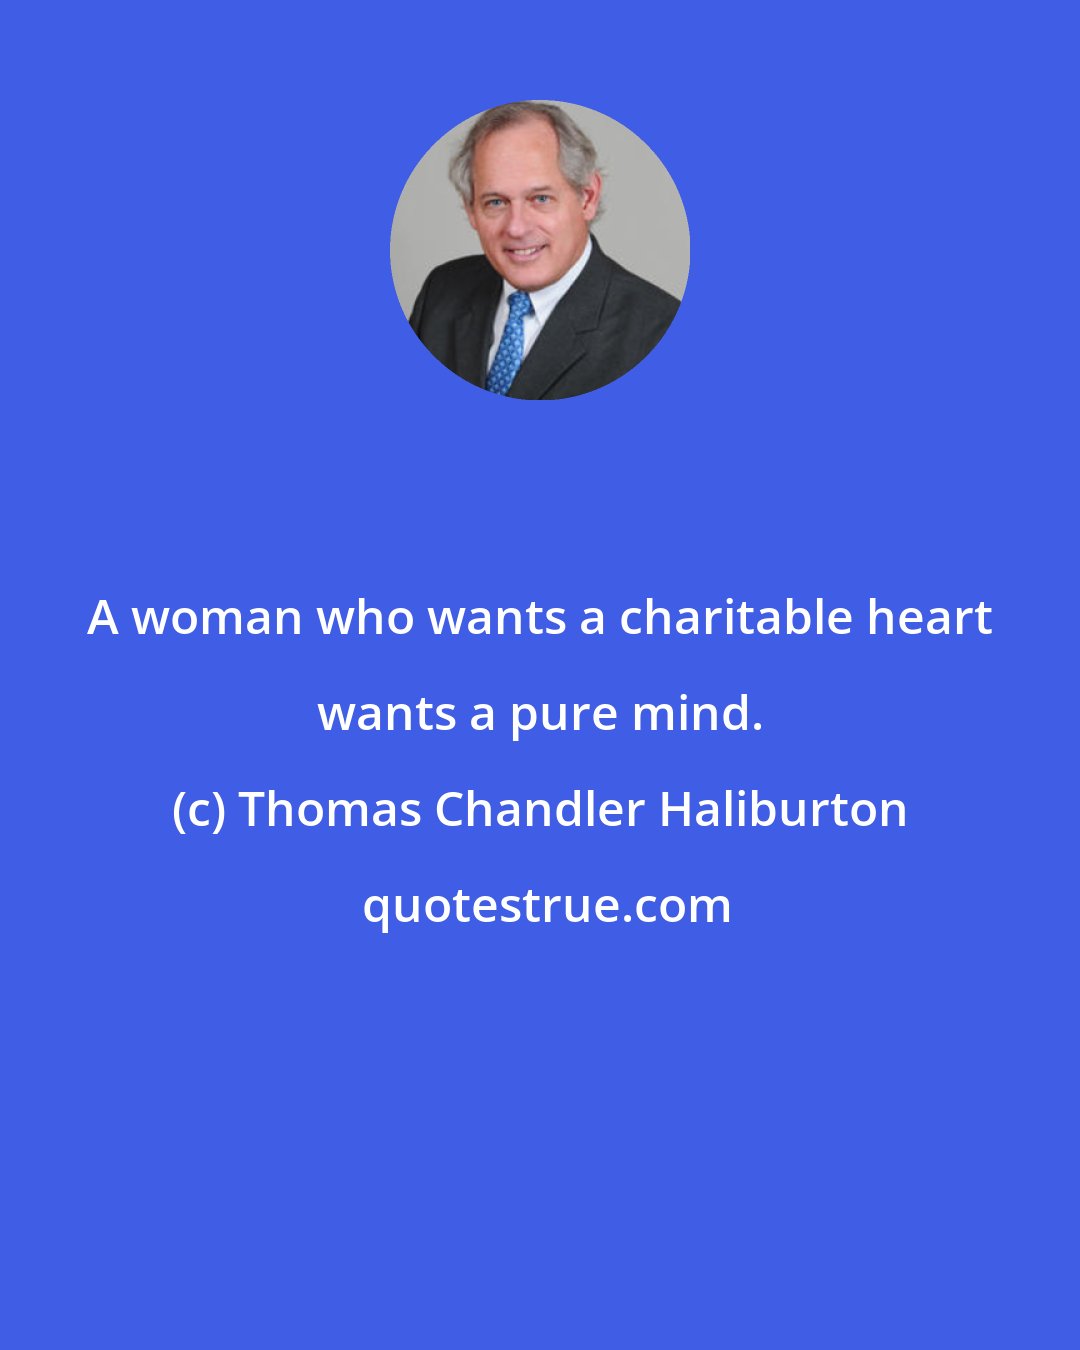 Thomas Chandler Haliburton: A woman who wants a charitable heart wants a pure mind.